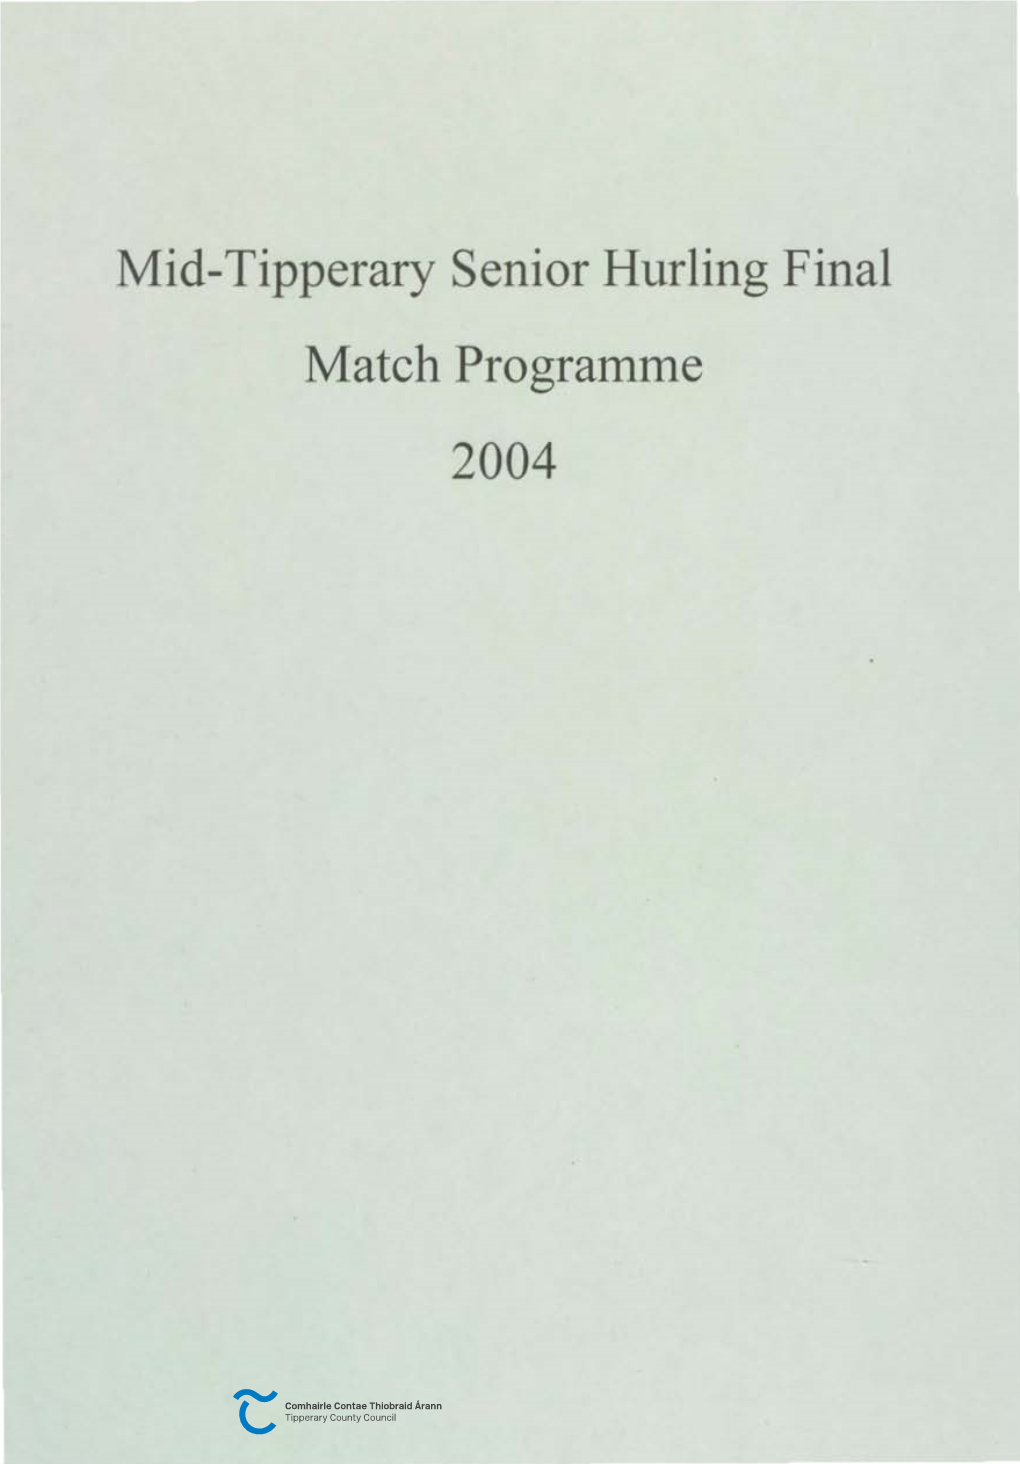 Mid-Tipperary Senior Hurling Final Match Programme 2004 Maclochlainn (Road Markings) Ltd